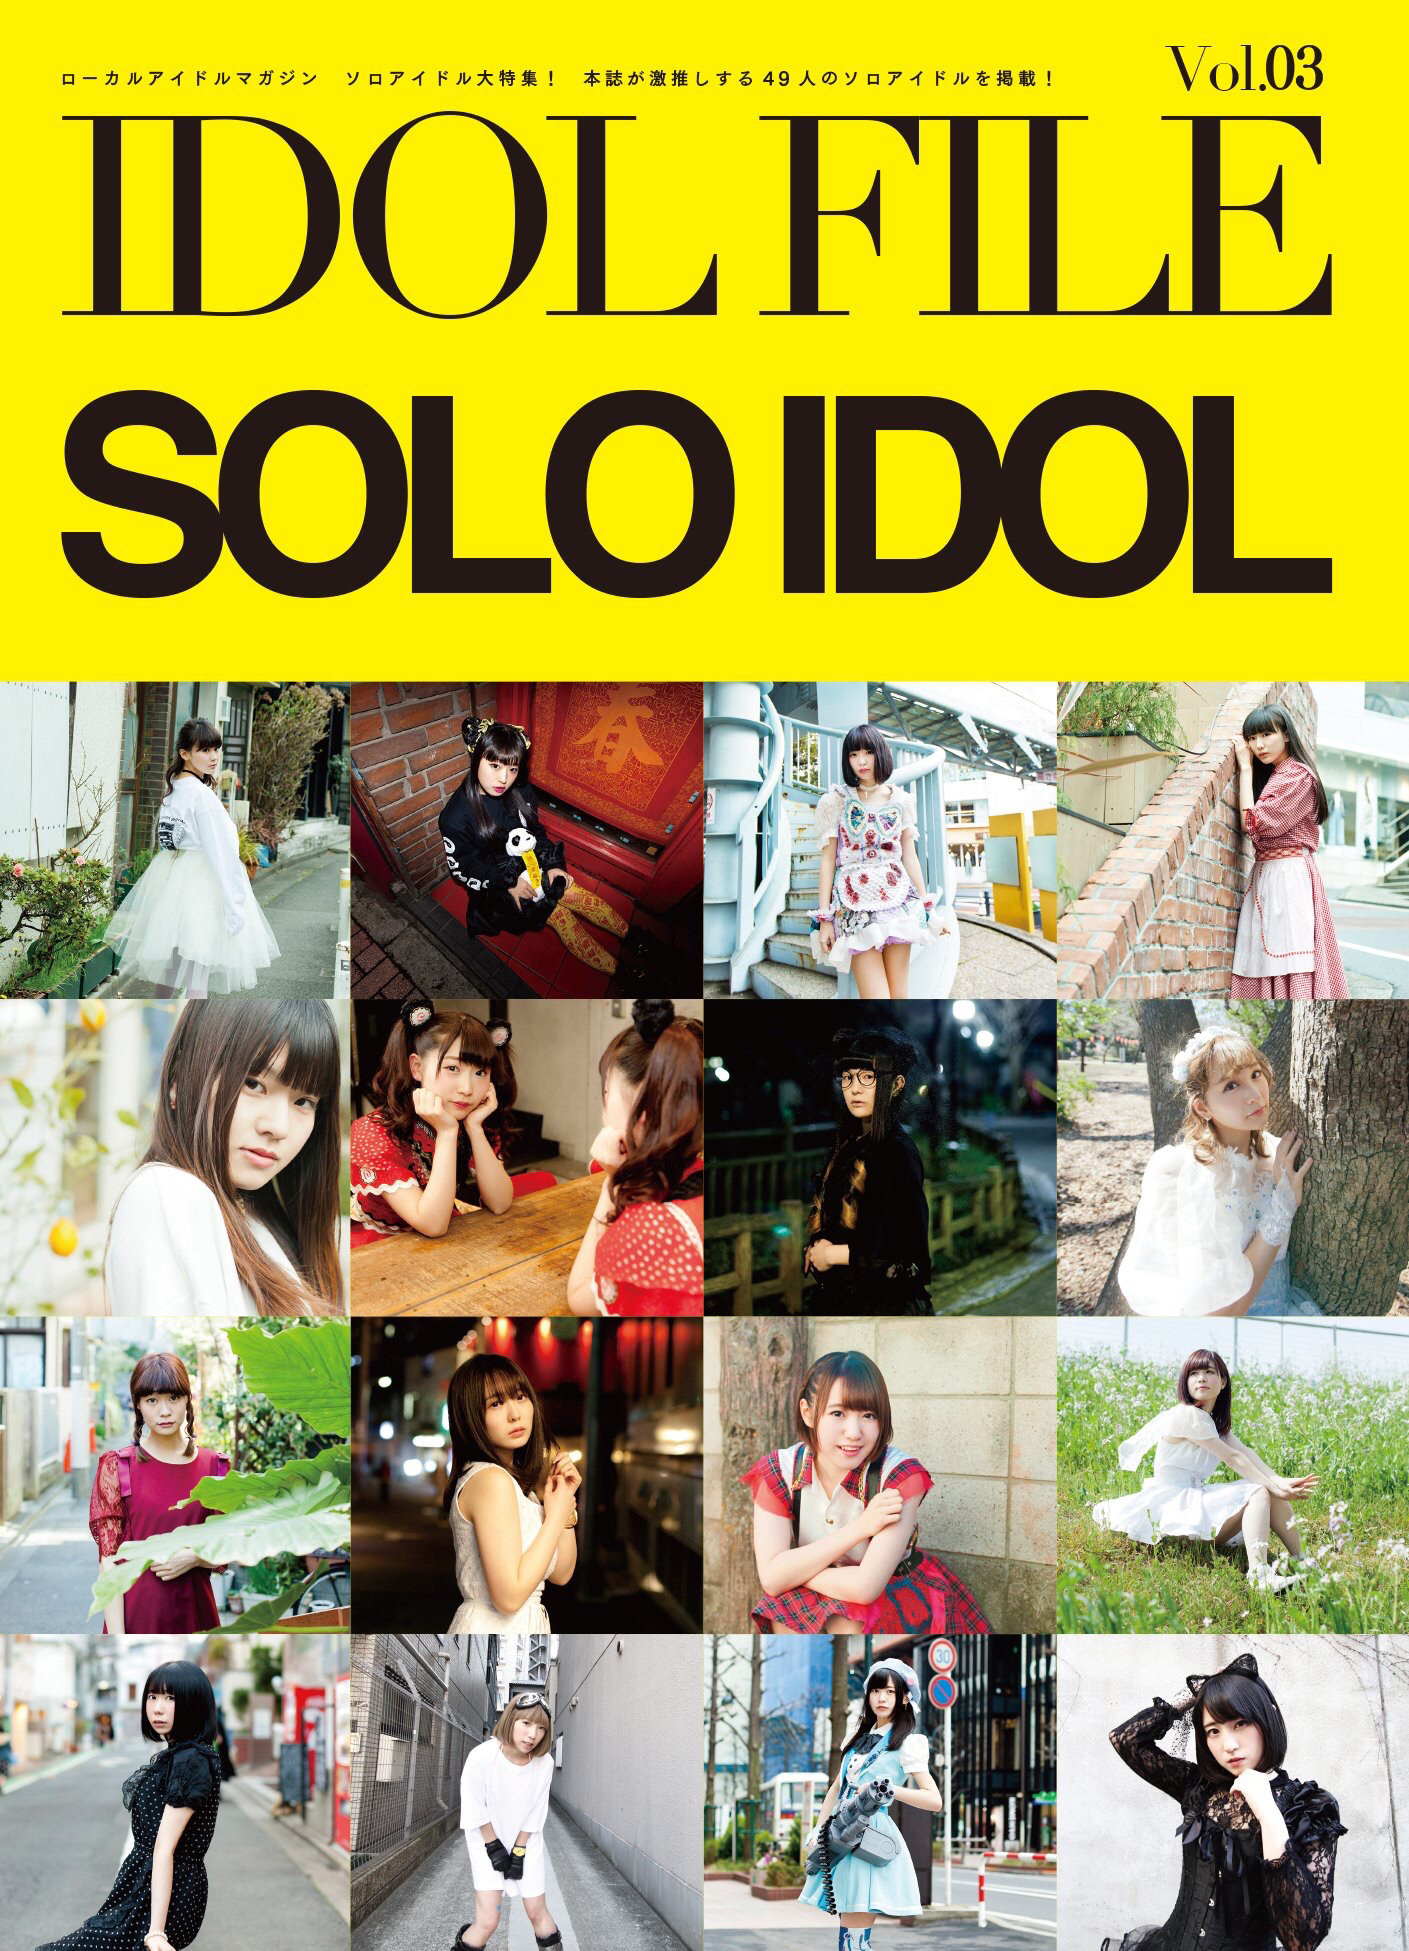 【出演情報】西田早希 / IDOL FILE Vol.03 SOLO IDOL